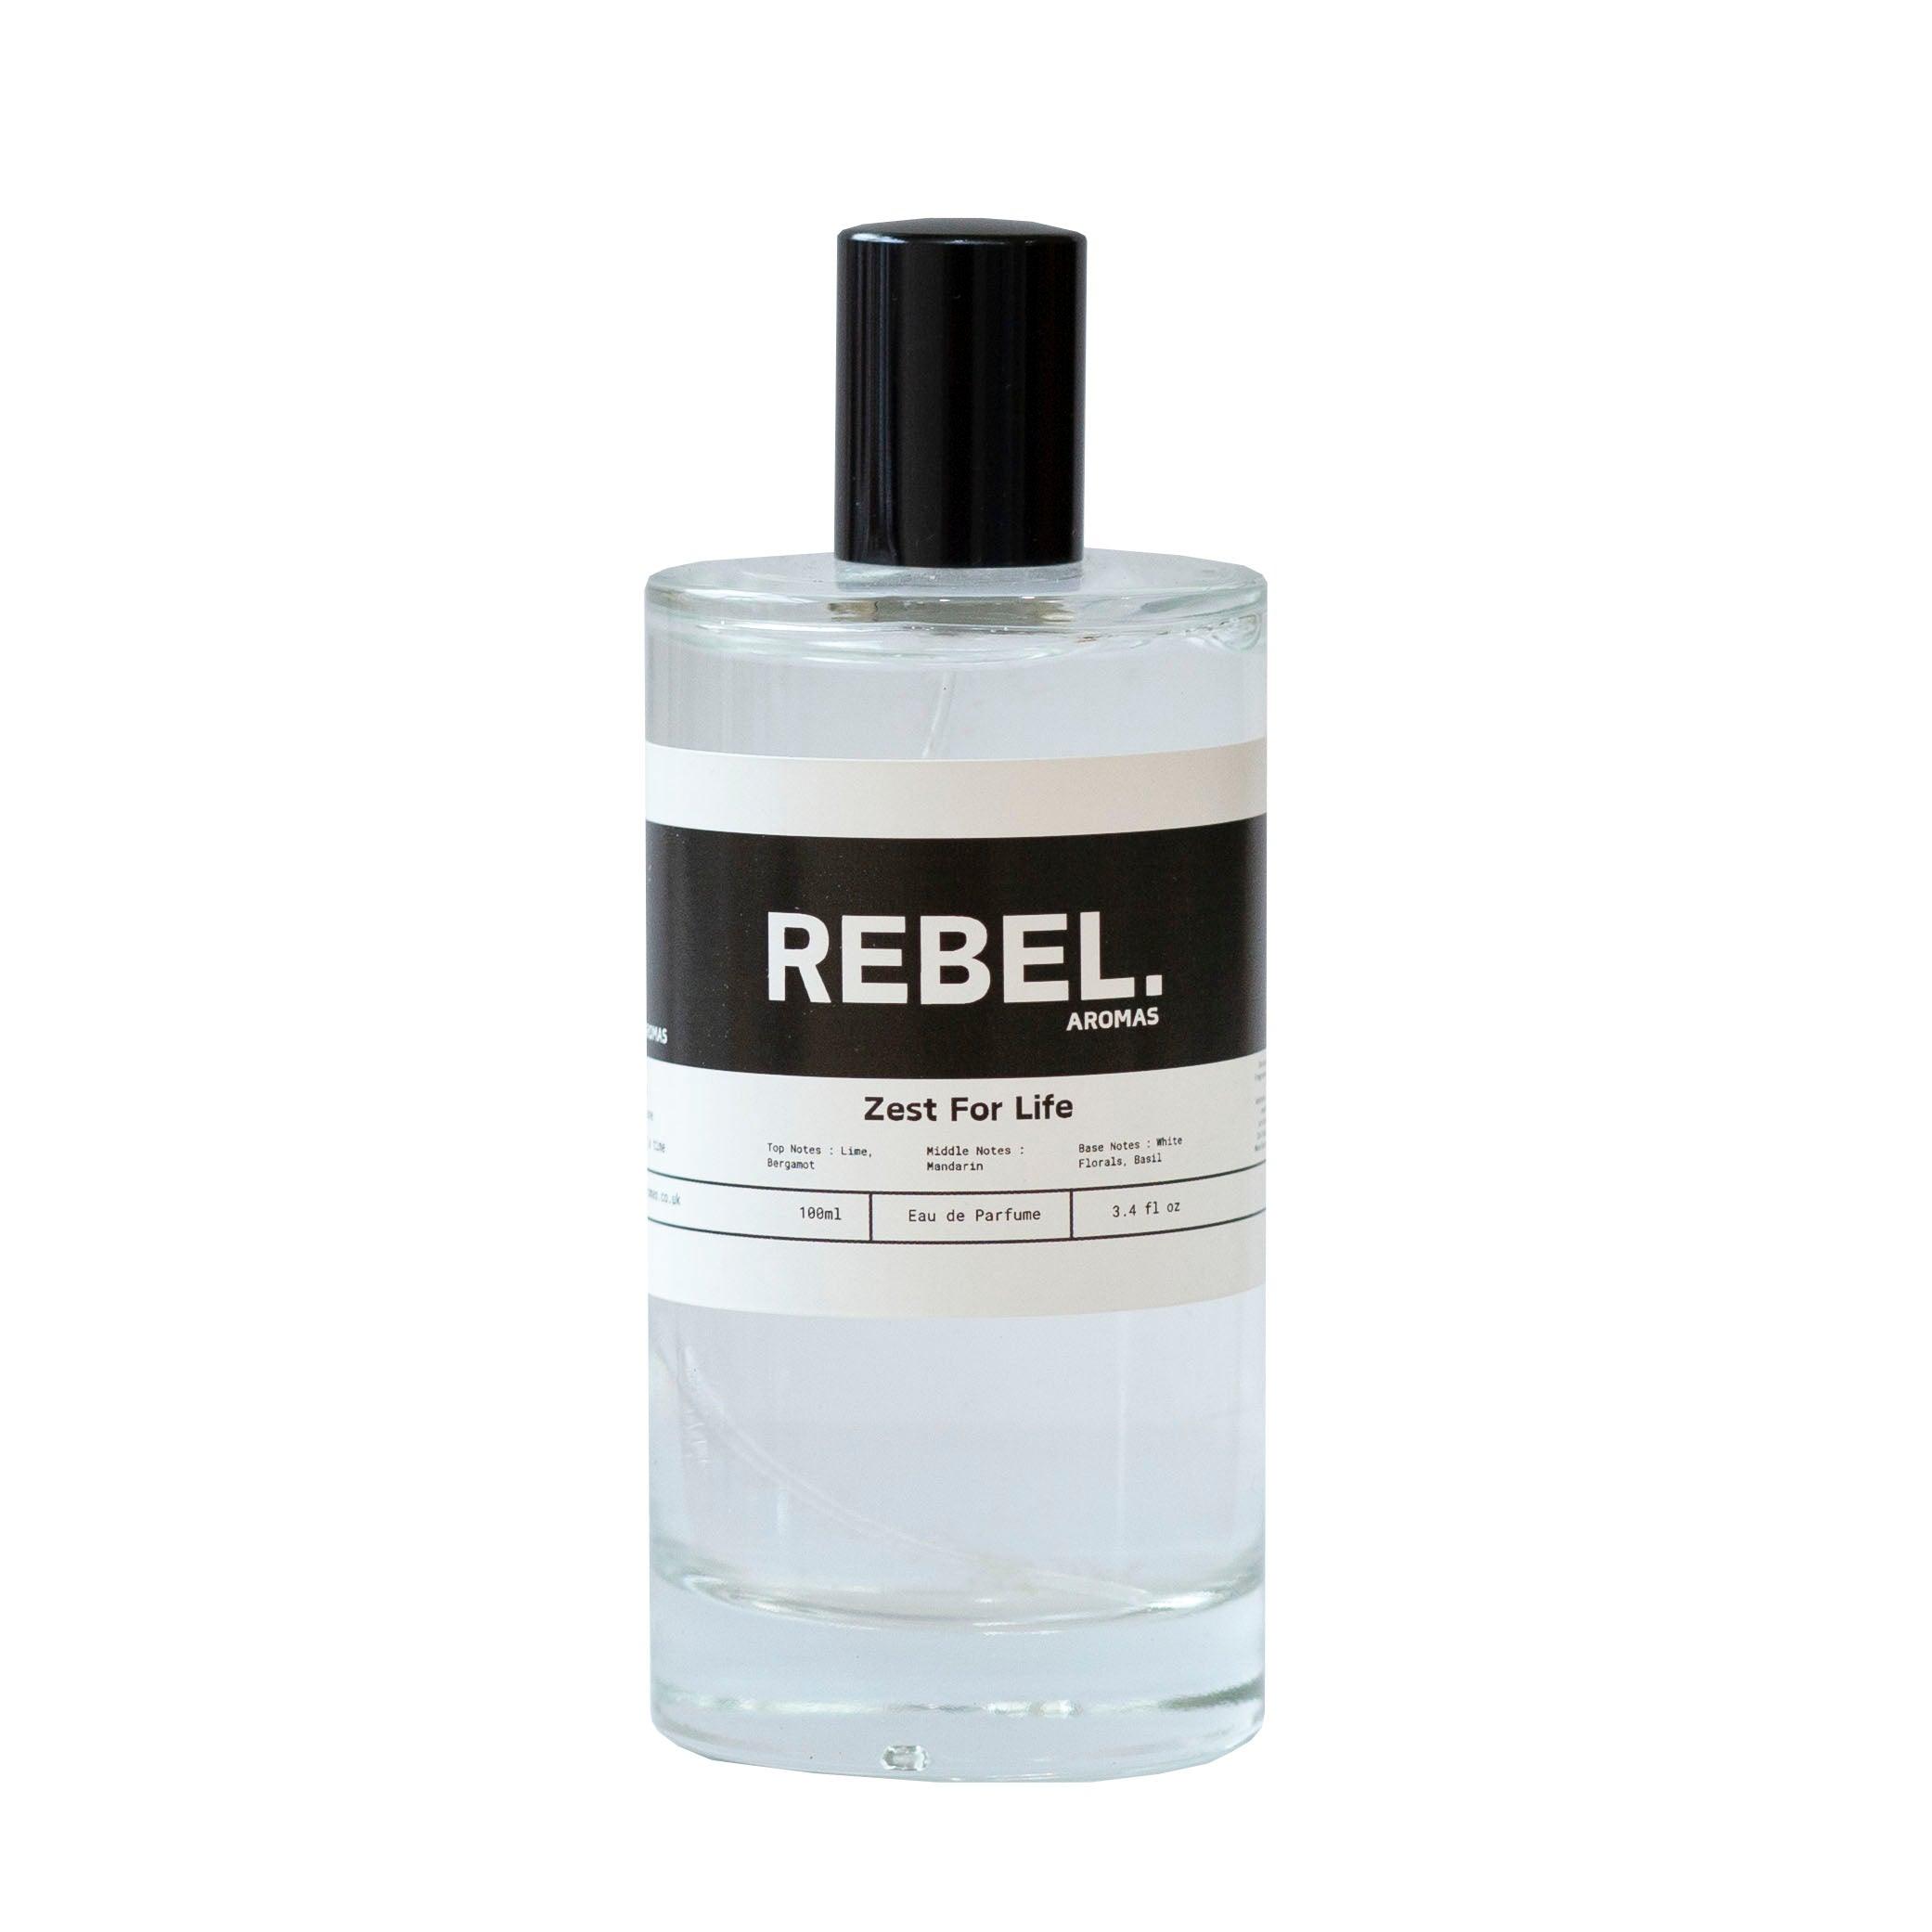 Zest For Life - Rebel Aromas